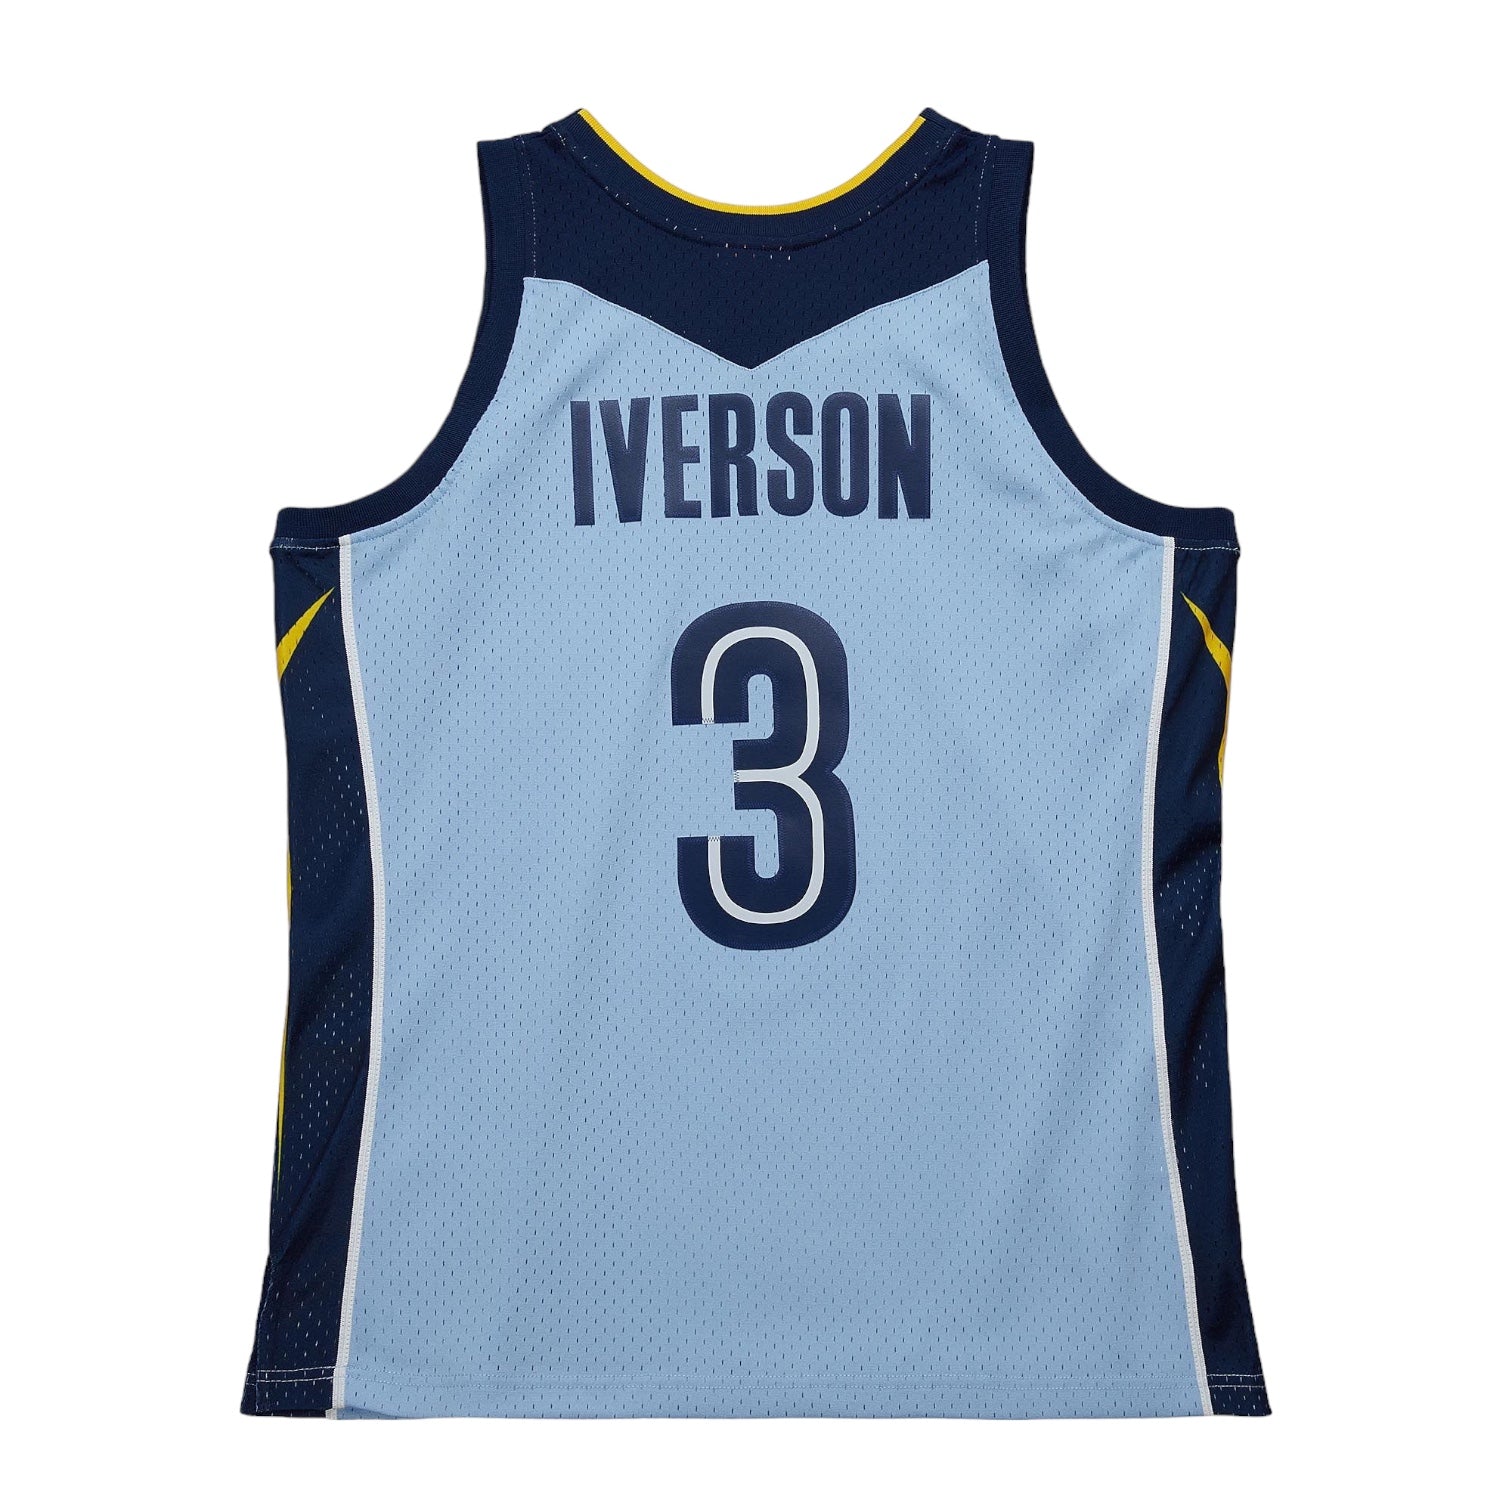 MITCHELL & NESS: Grizzlies Iverson Alternate Jersey